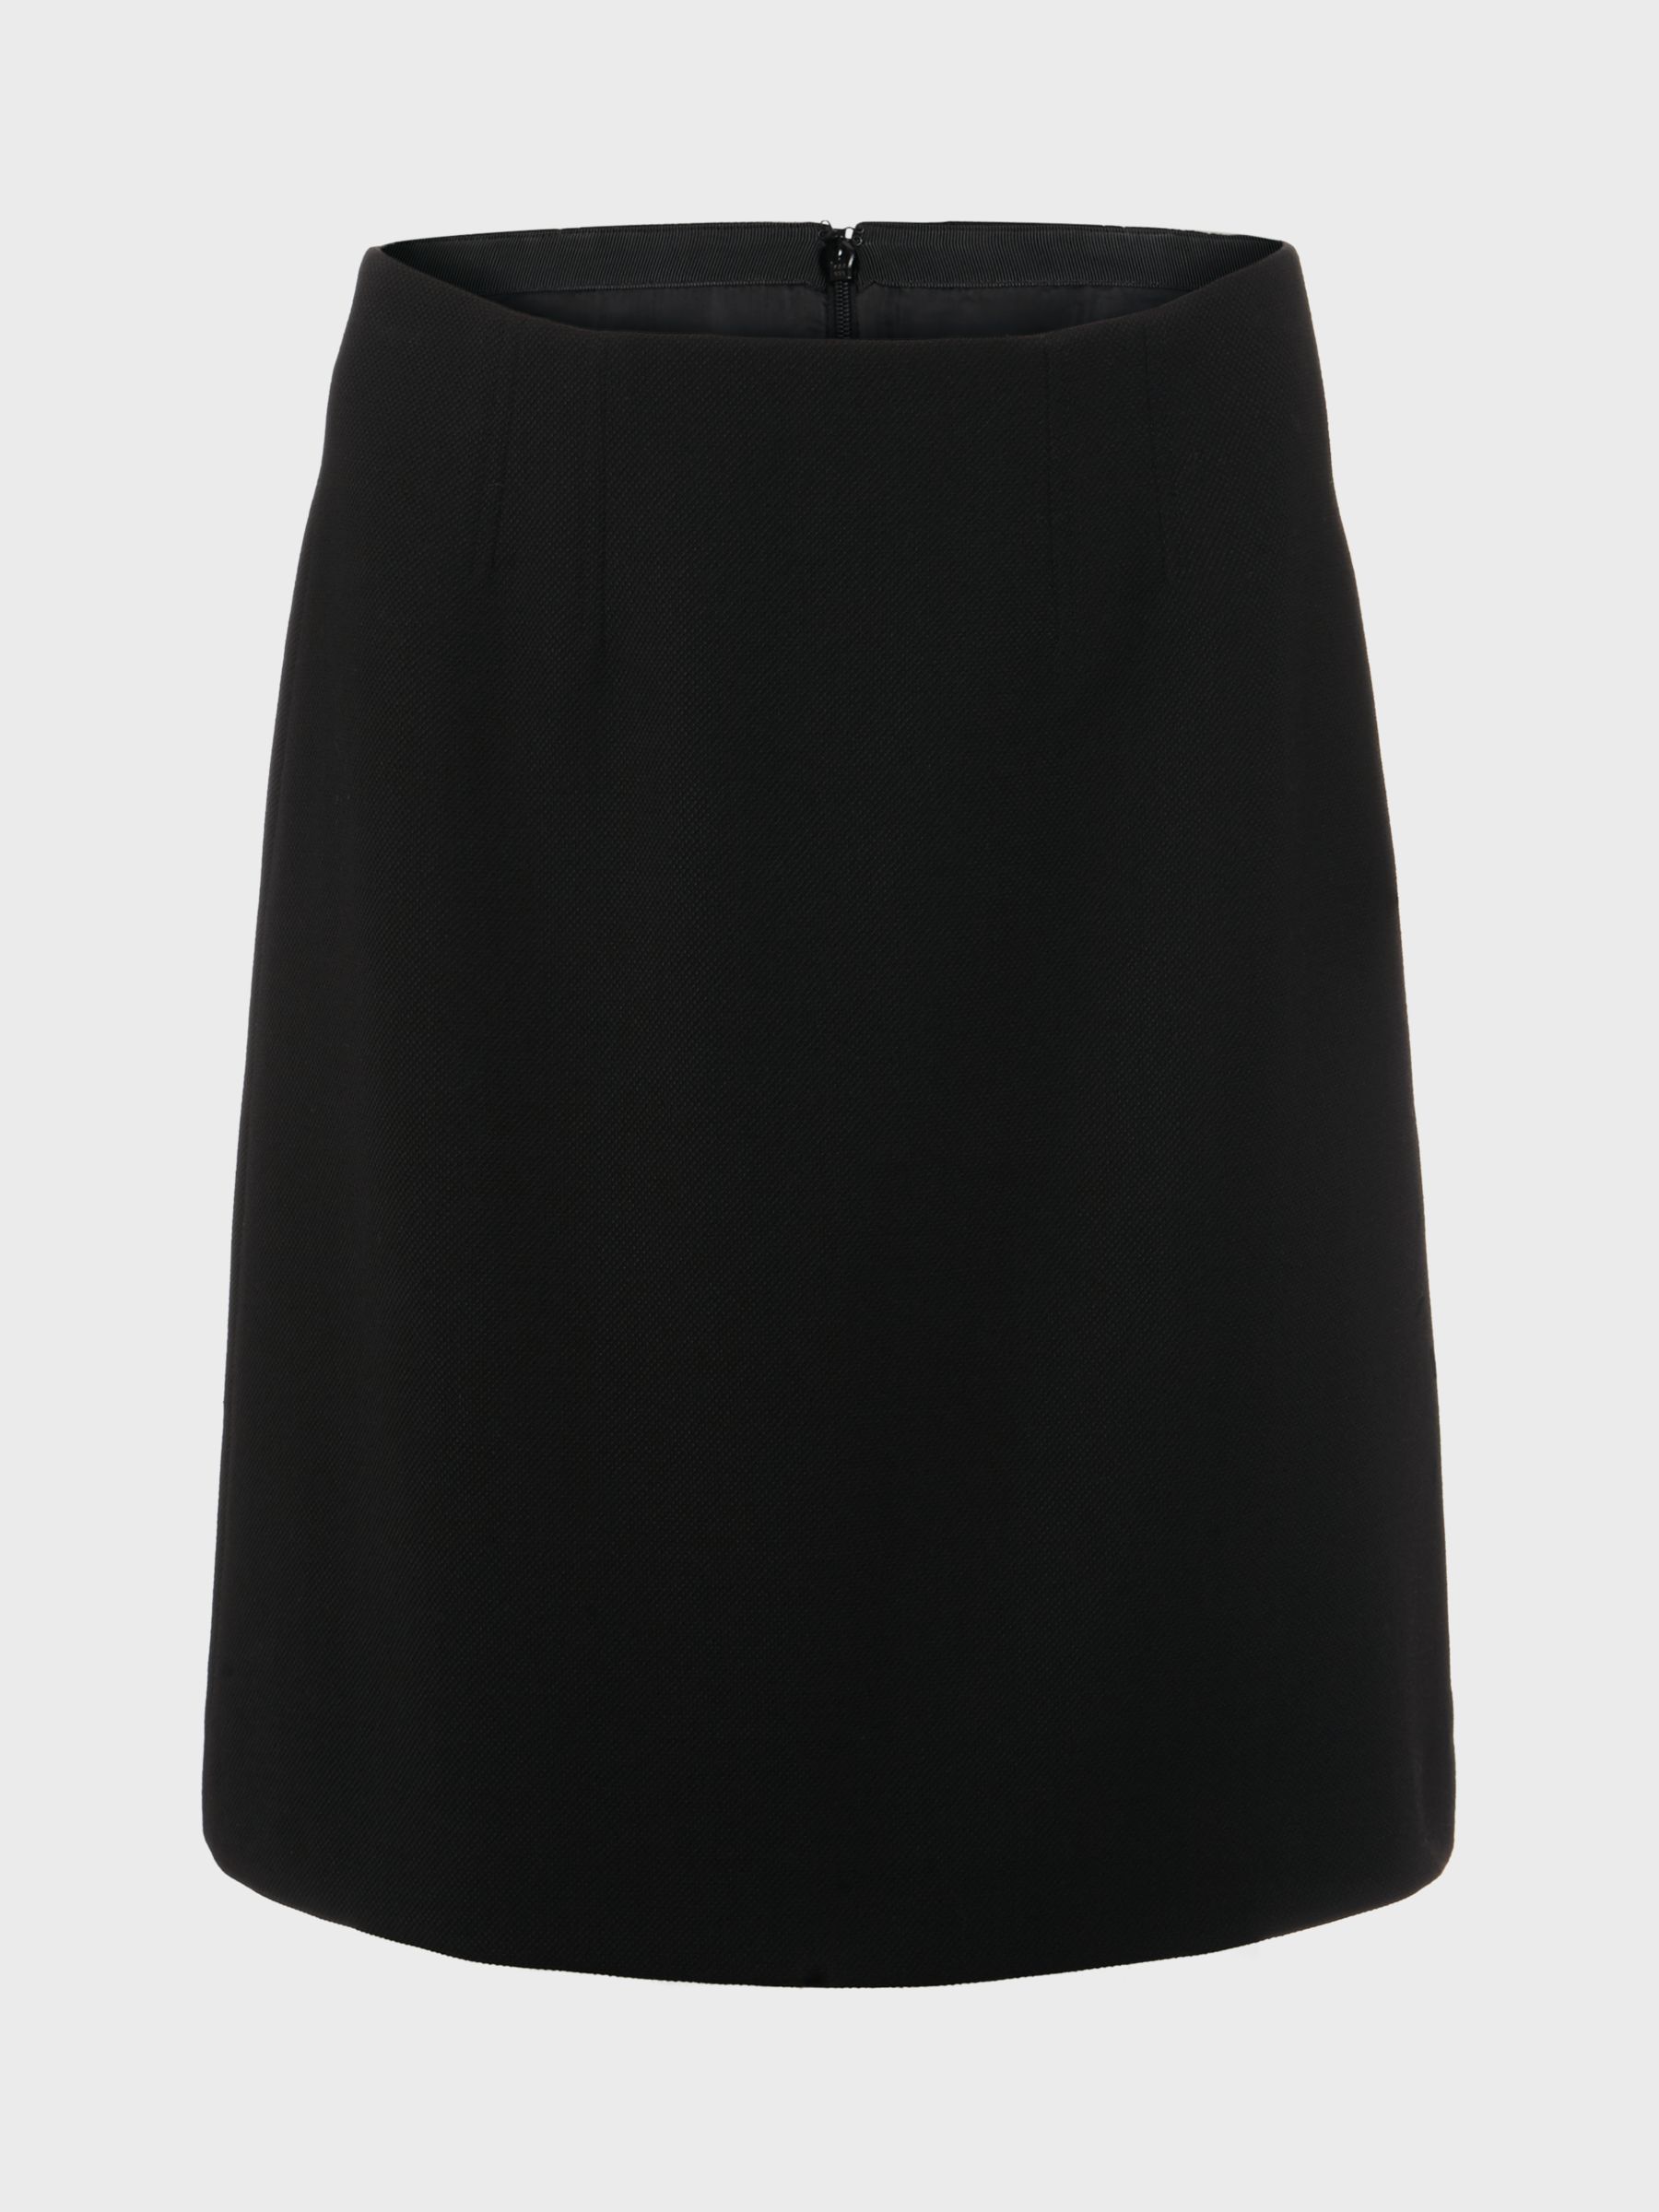 Hobbs Mia A-Line Mini Skirt, Black at John Lewis & Partners